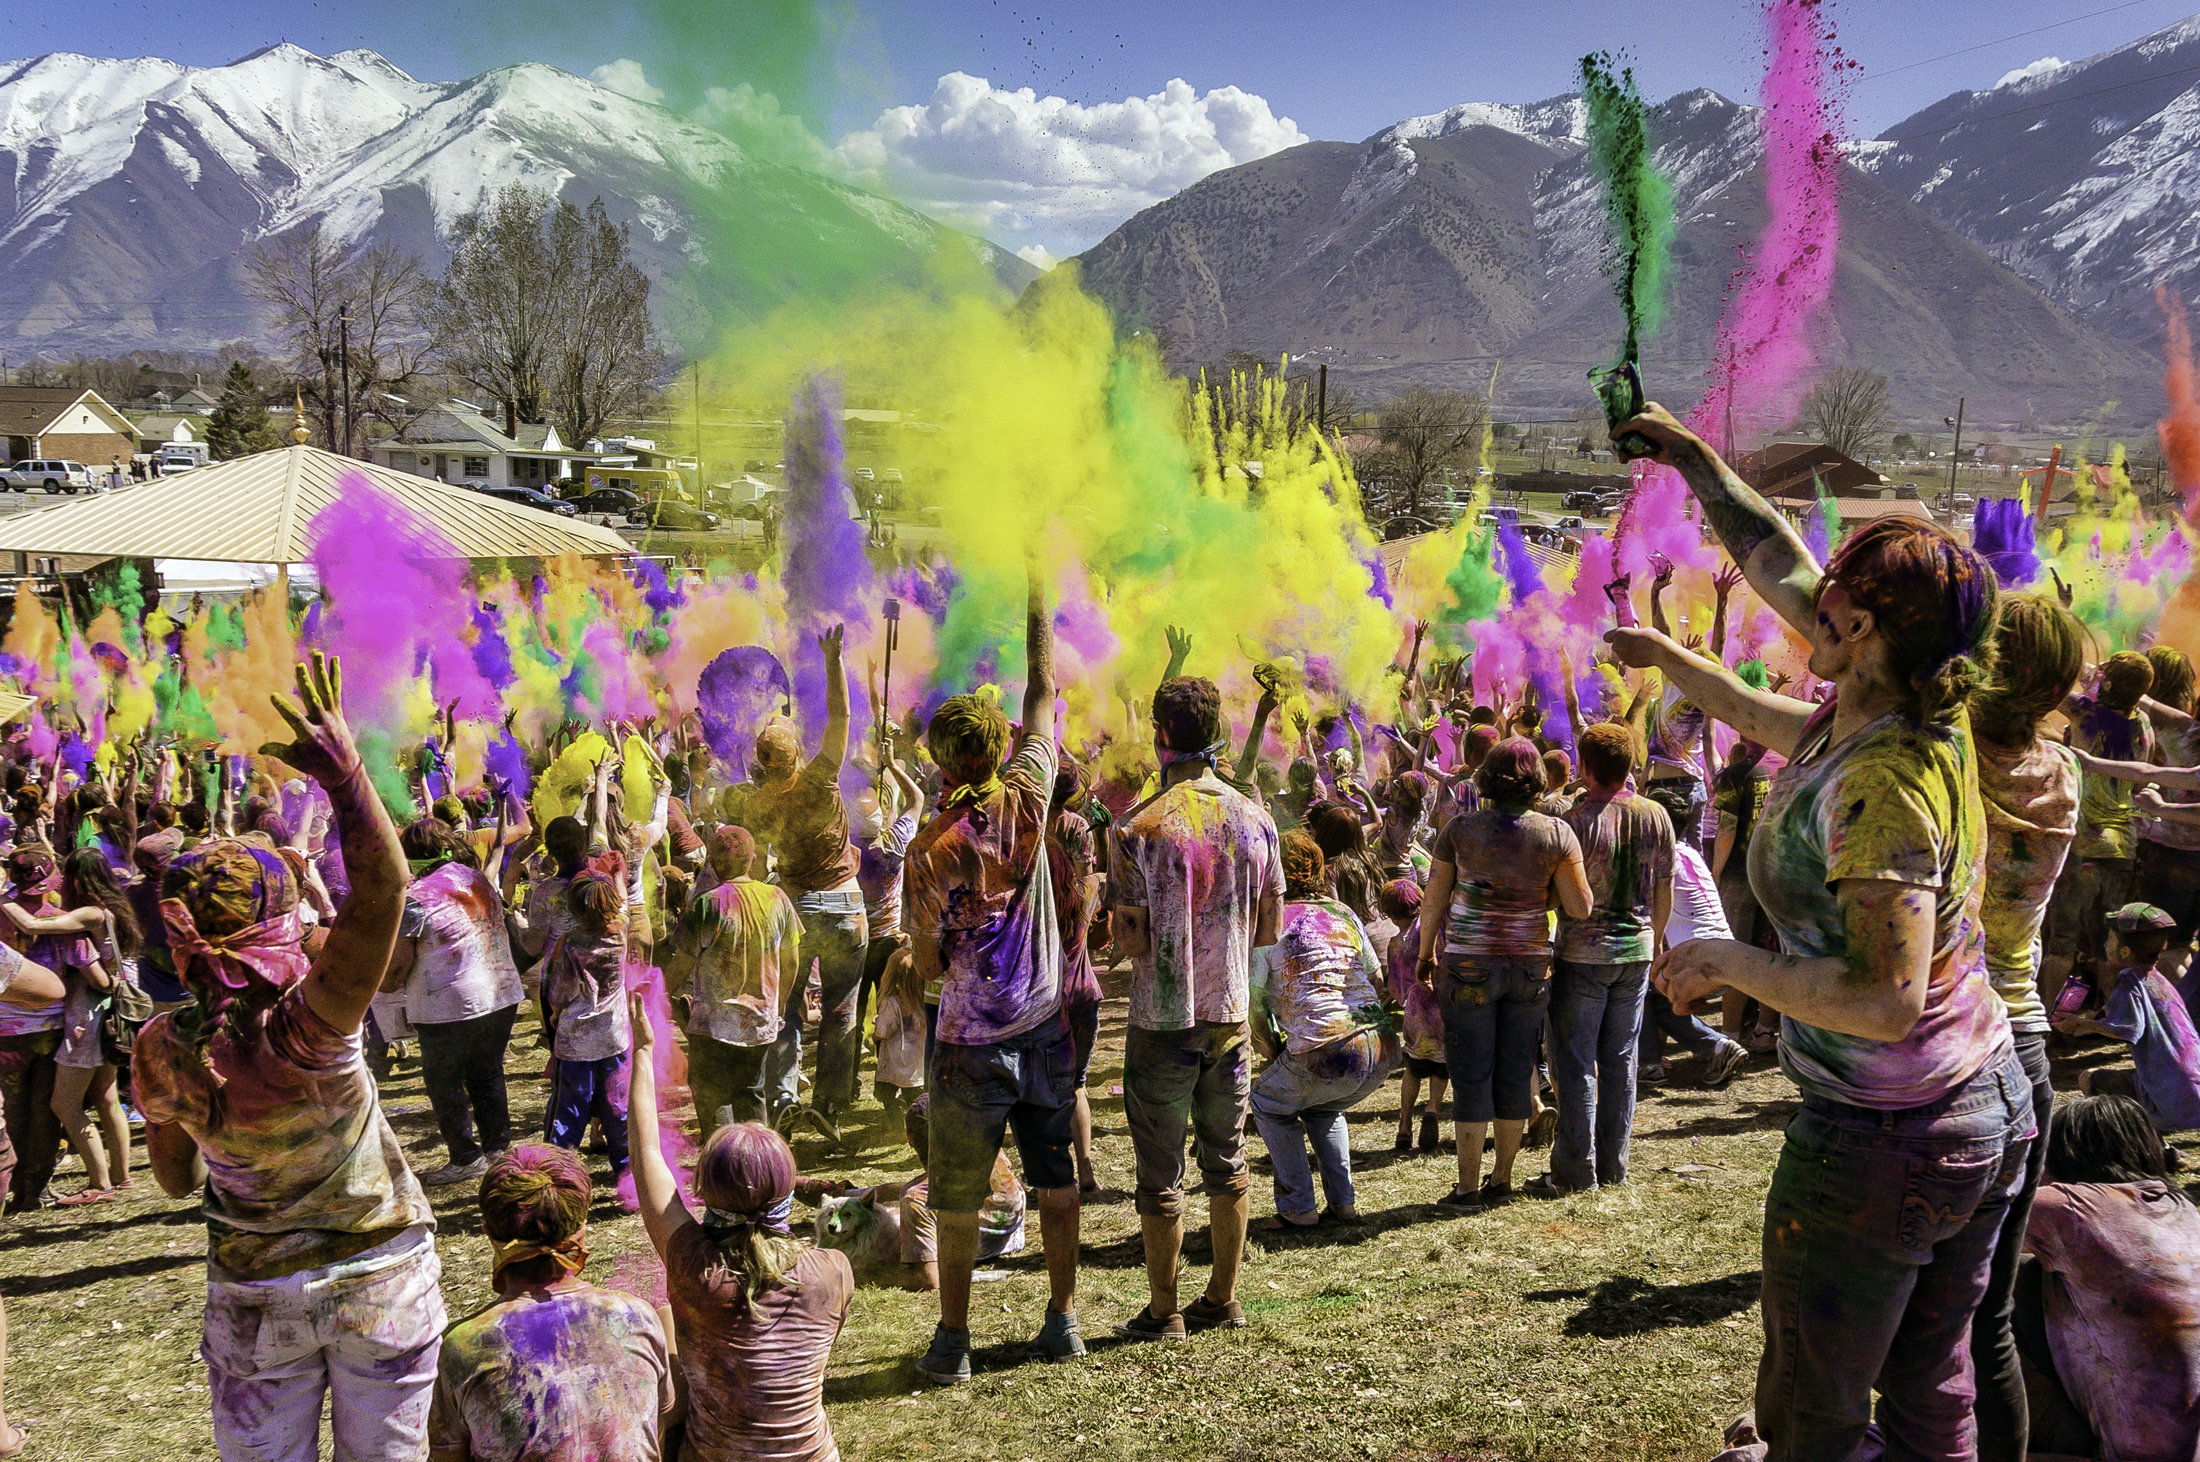 A celebration of Holi Festival of Colors